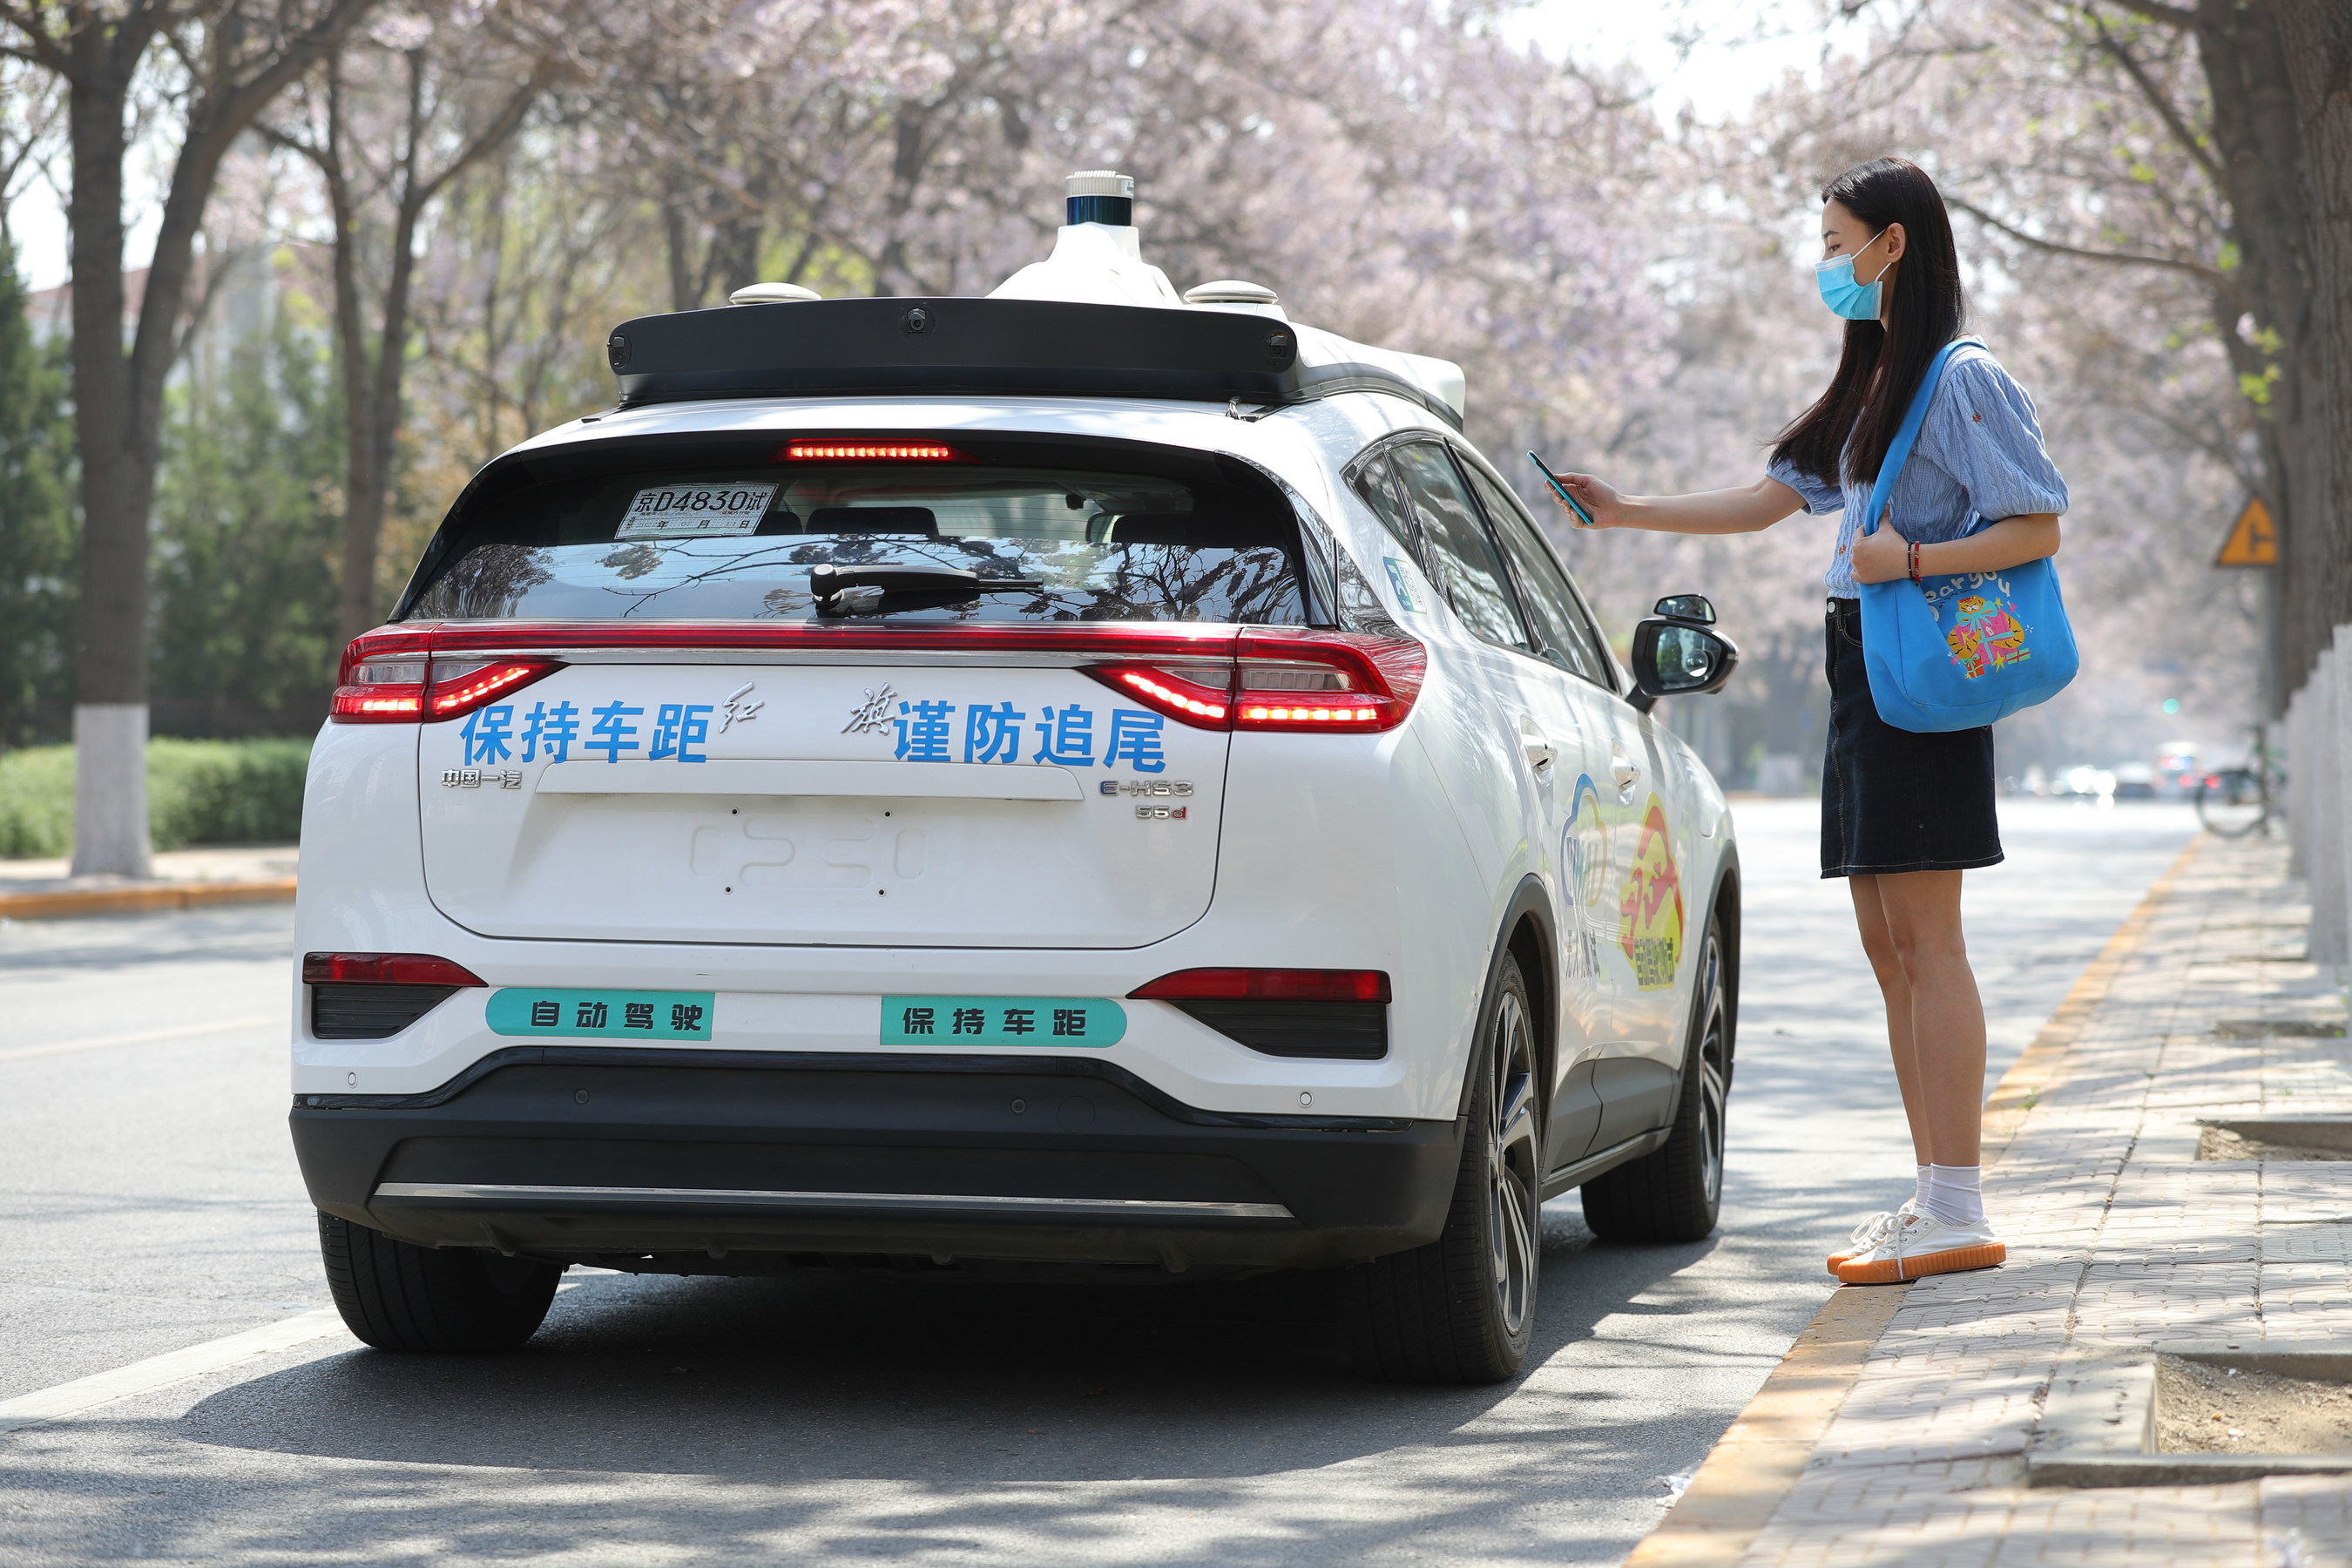 AVs smart mobility ride-hailing China Baidu (image credit: Baidu)